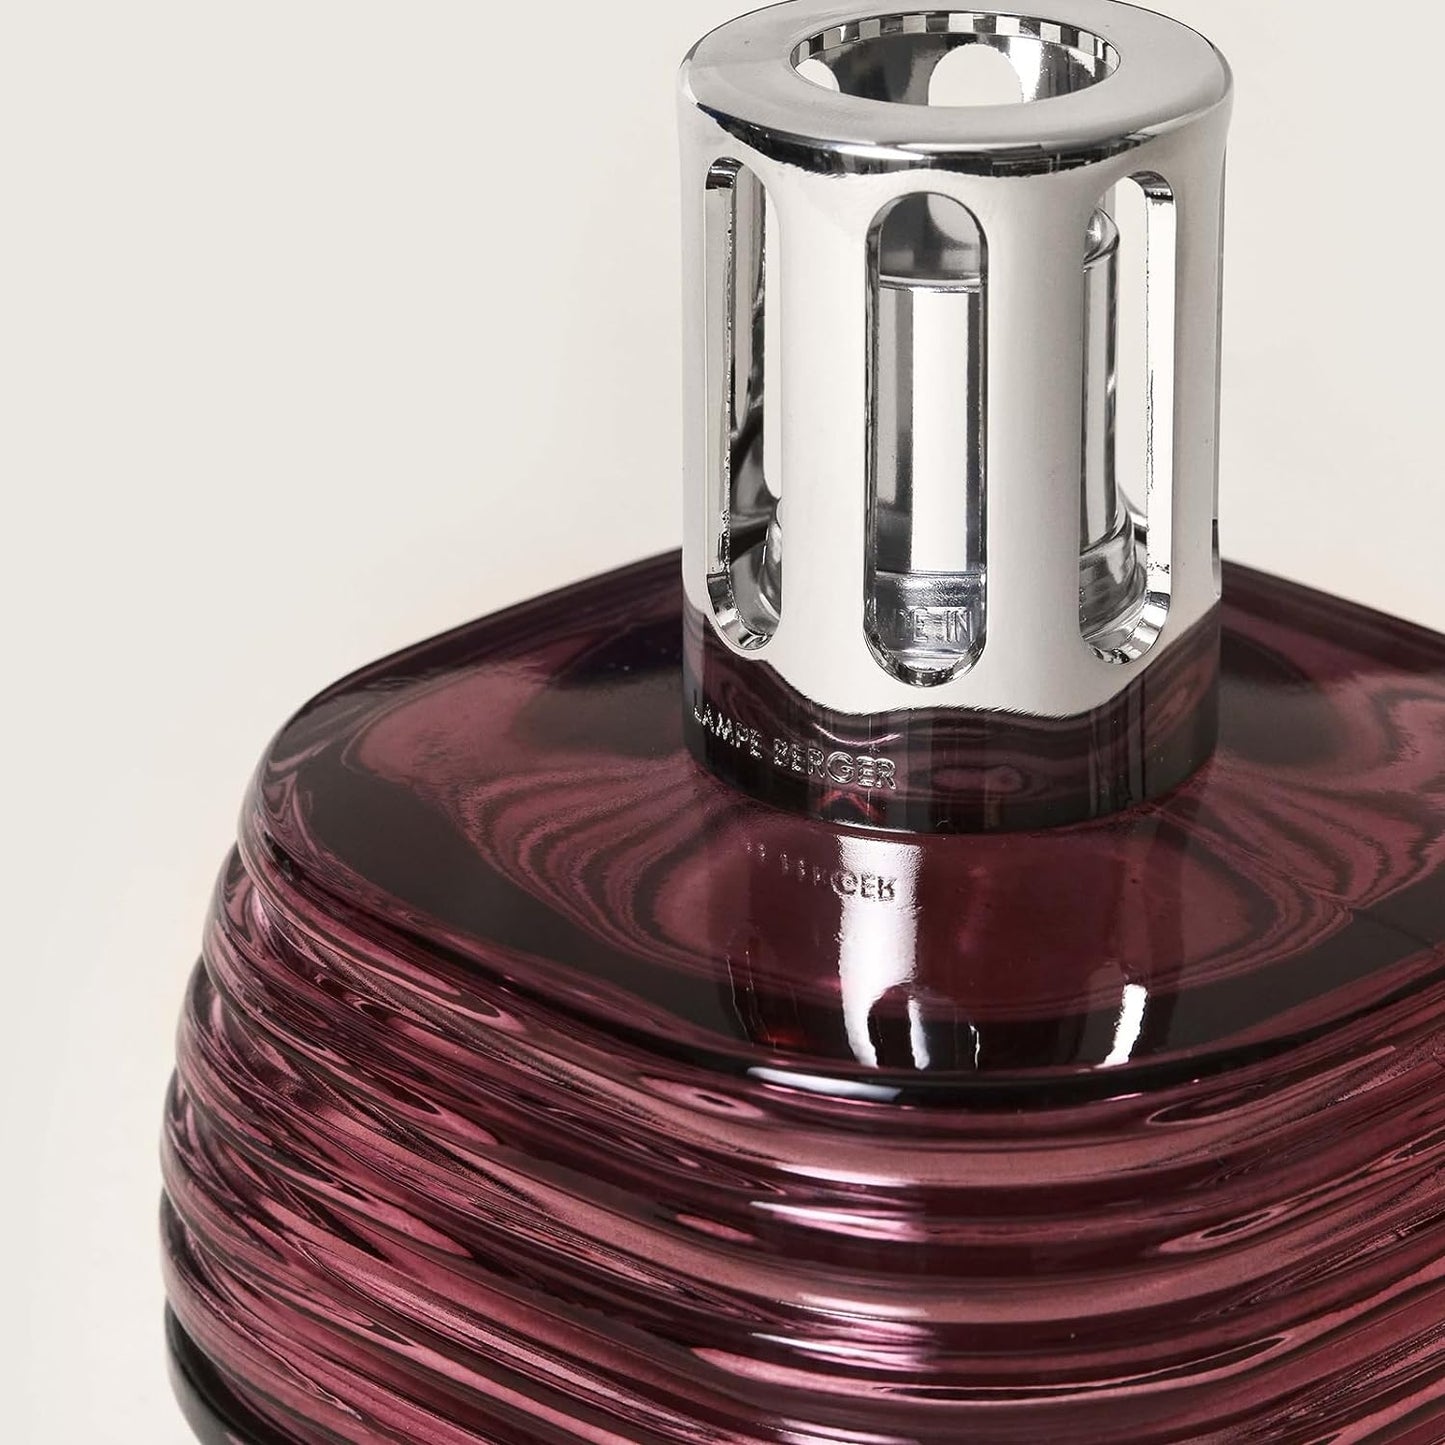 Maison Berger Lampe Vibes Plum Gift - Buckhead Vacuums